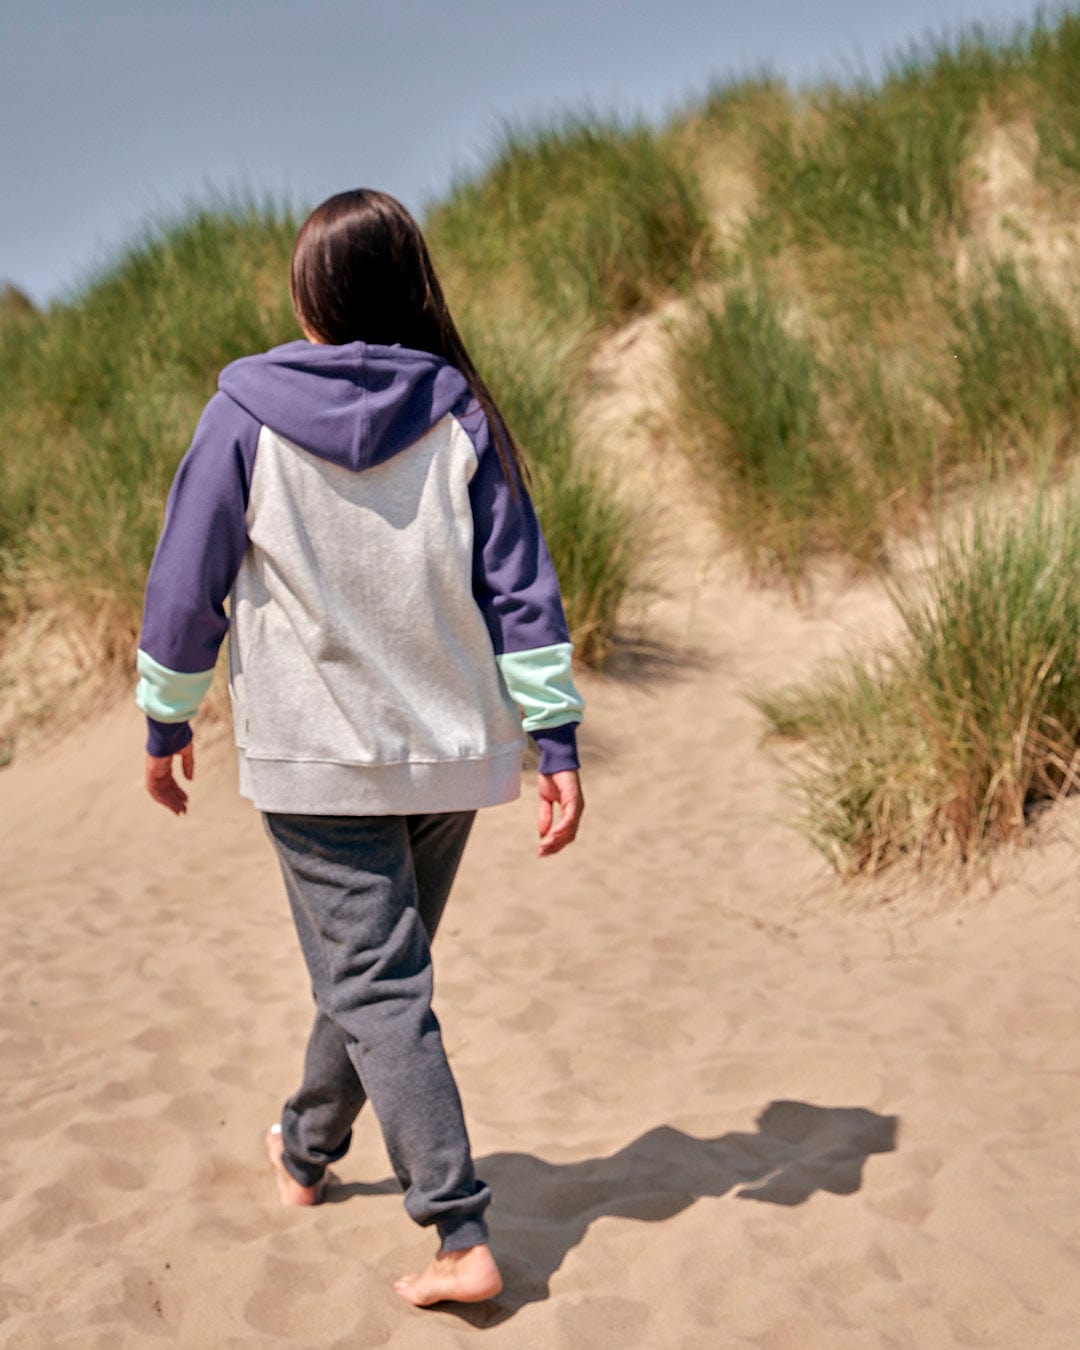 A girl walking on a sand dune wearing a Saltrock Jan - Womens Zip Hoodie - Light /Grey and sweatpants.